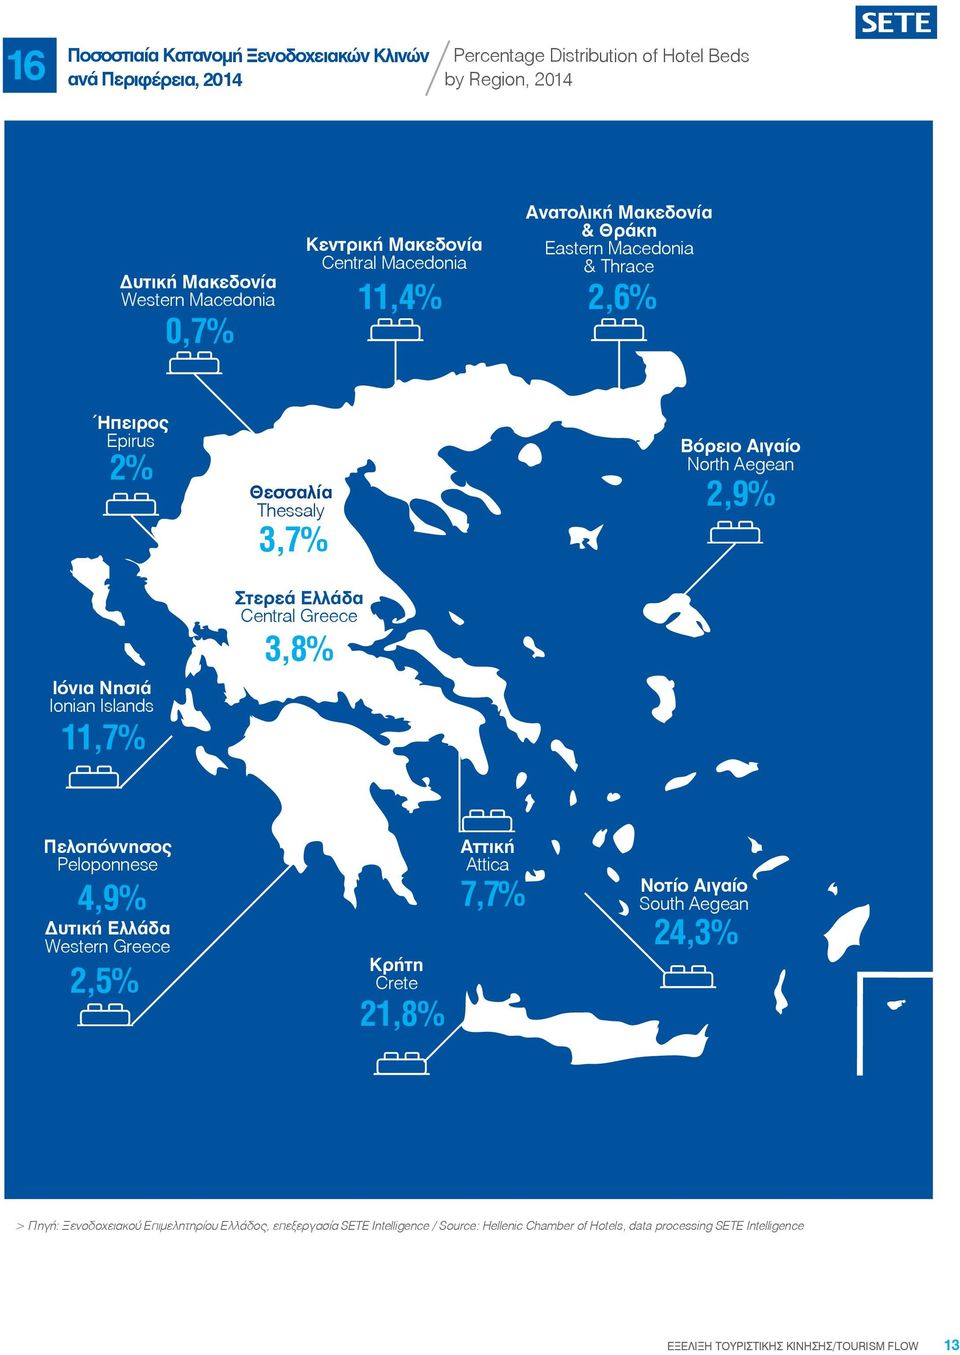 Greece 3,8% Ιόνια Νησιά Ionian Islands 11,7% Πελοπόννησος Peloponnese 4,9% Δυτική Ελλάδα Western Greece 2,5% Κρήτη Crete 21,8% Αττική Attica 7,7% Νοτίο Αιγαίο South Aegean 24,3% >